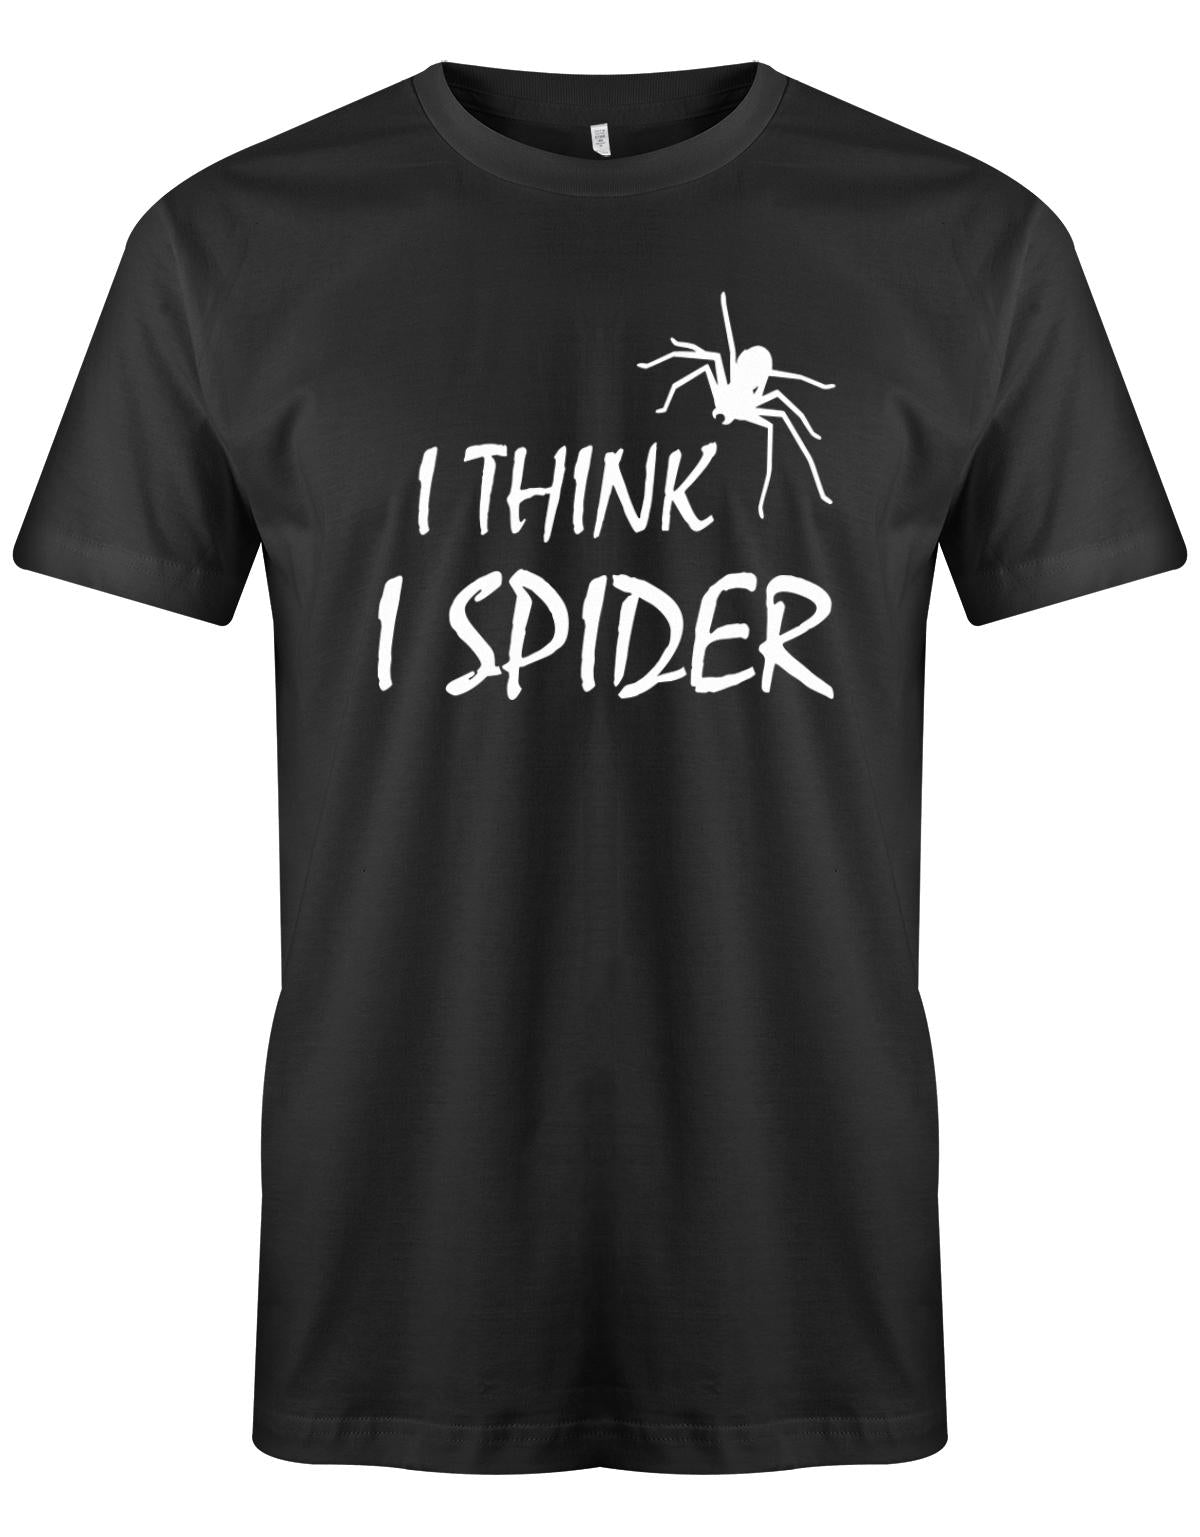 I-think-i-spider-herren-Shirt-schwarz